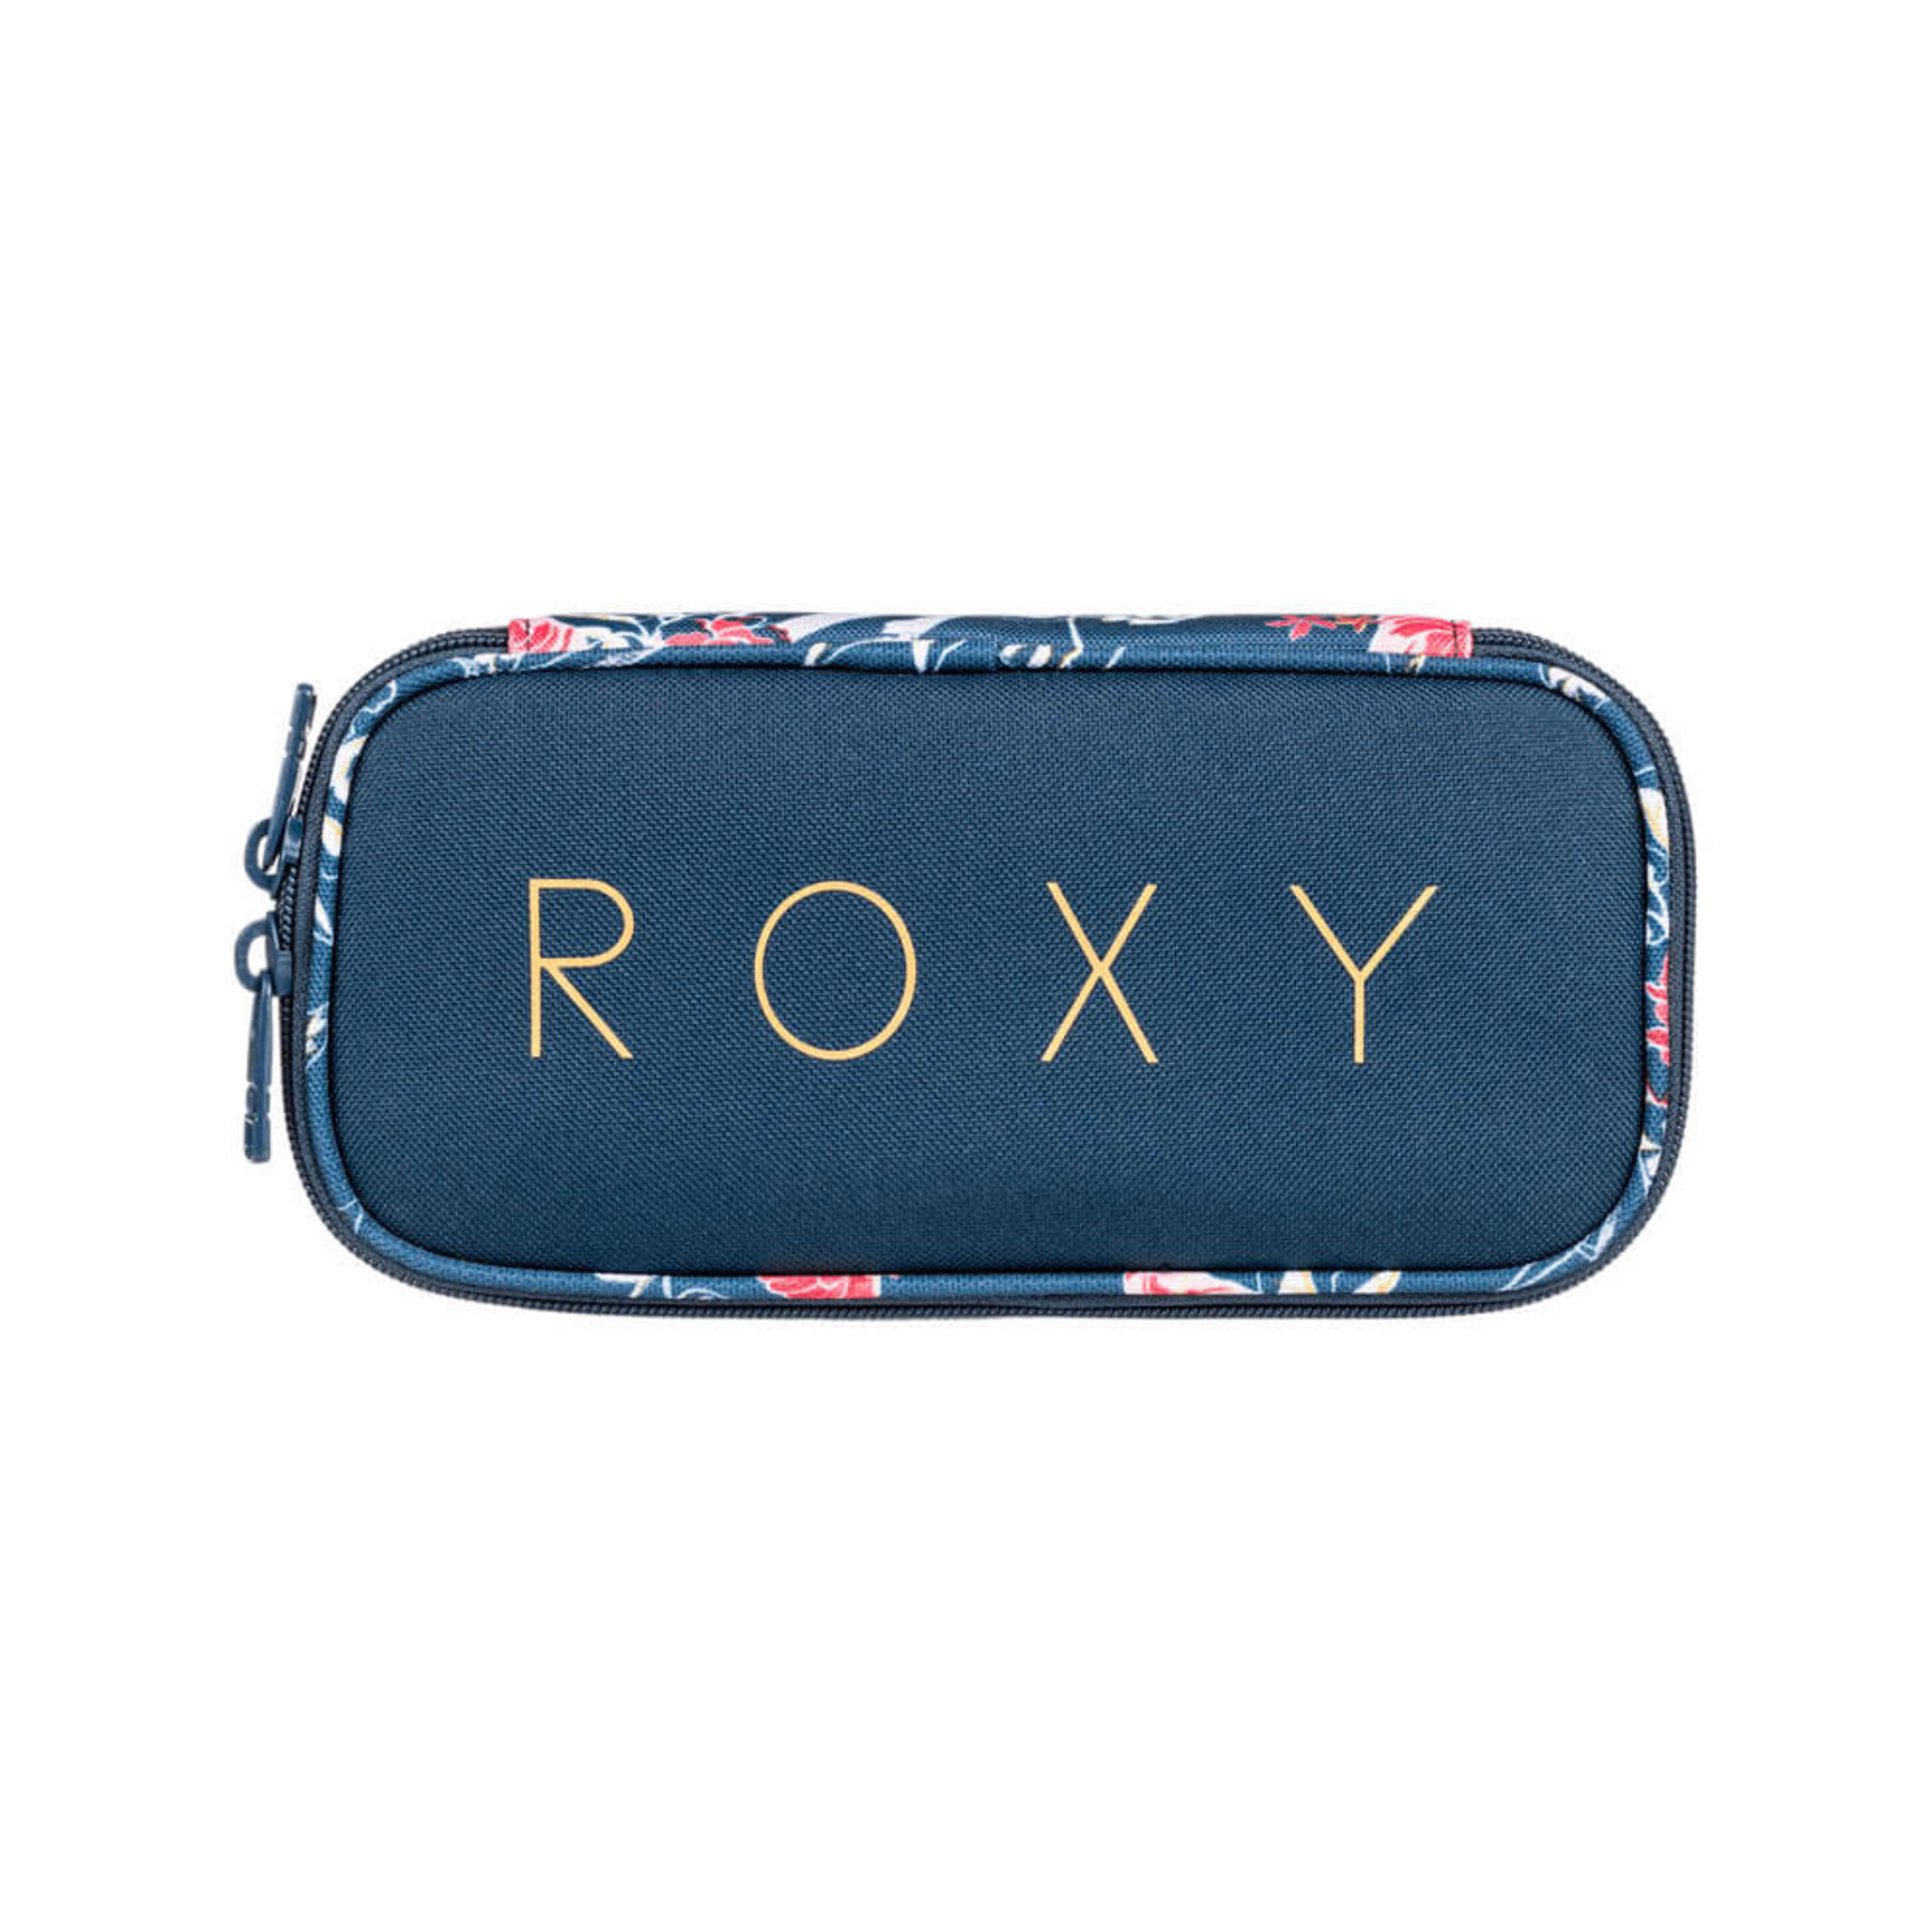 Roxy Travel Accessory- Money Belt, Blue